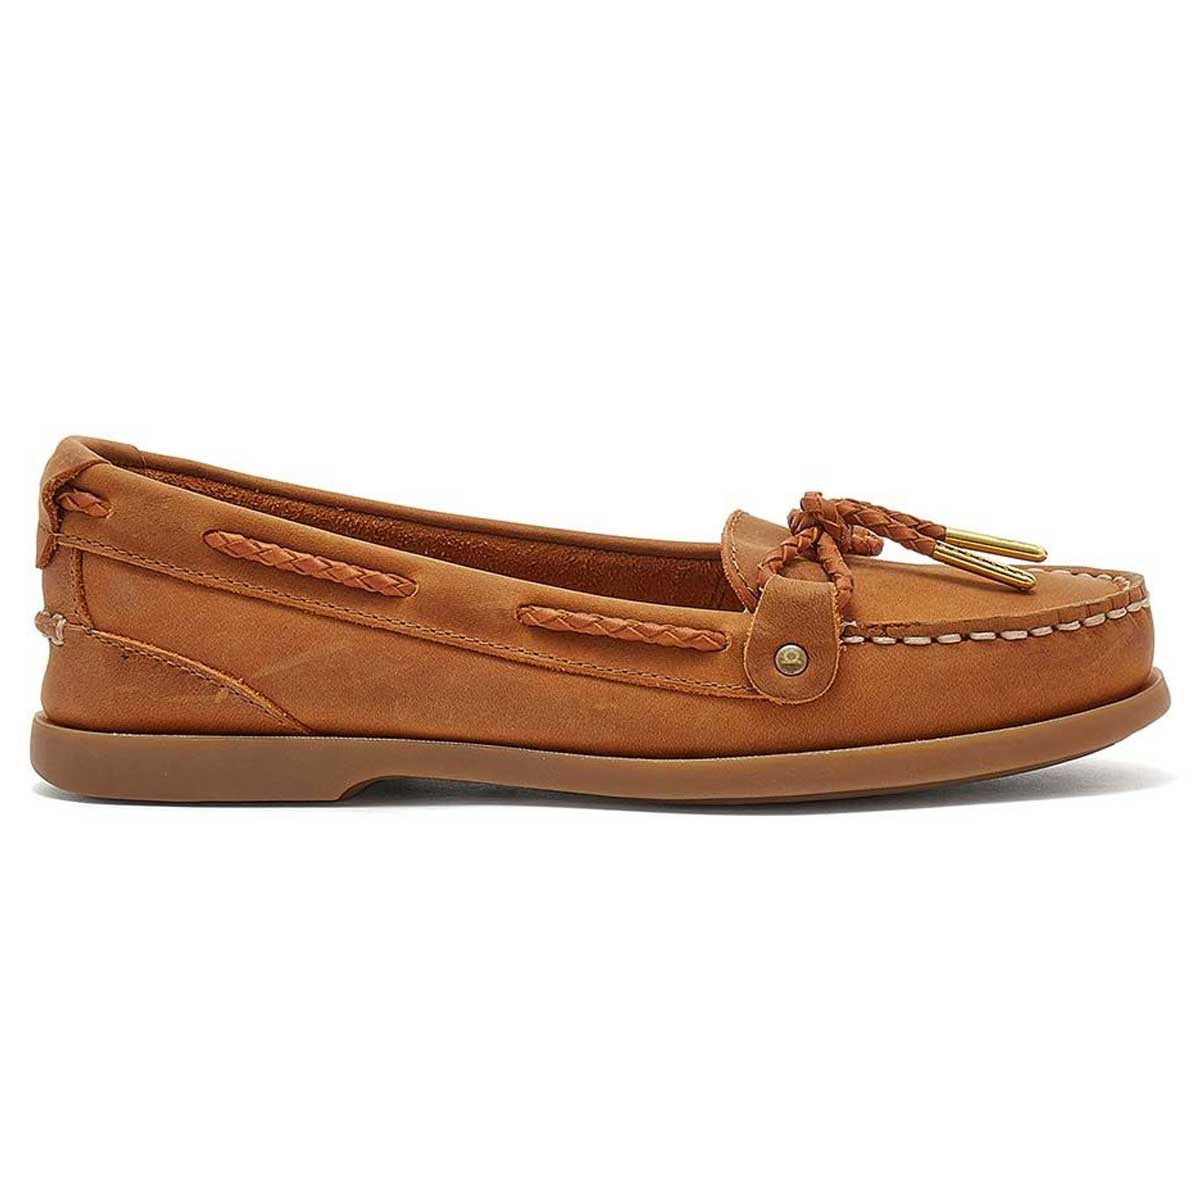 CHATHAM Rota G2 Leather Slip-On Boat Shoes - Women's - Walnut